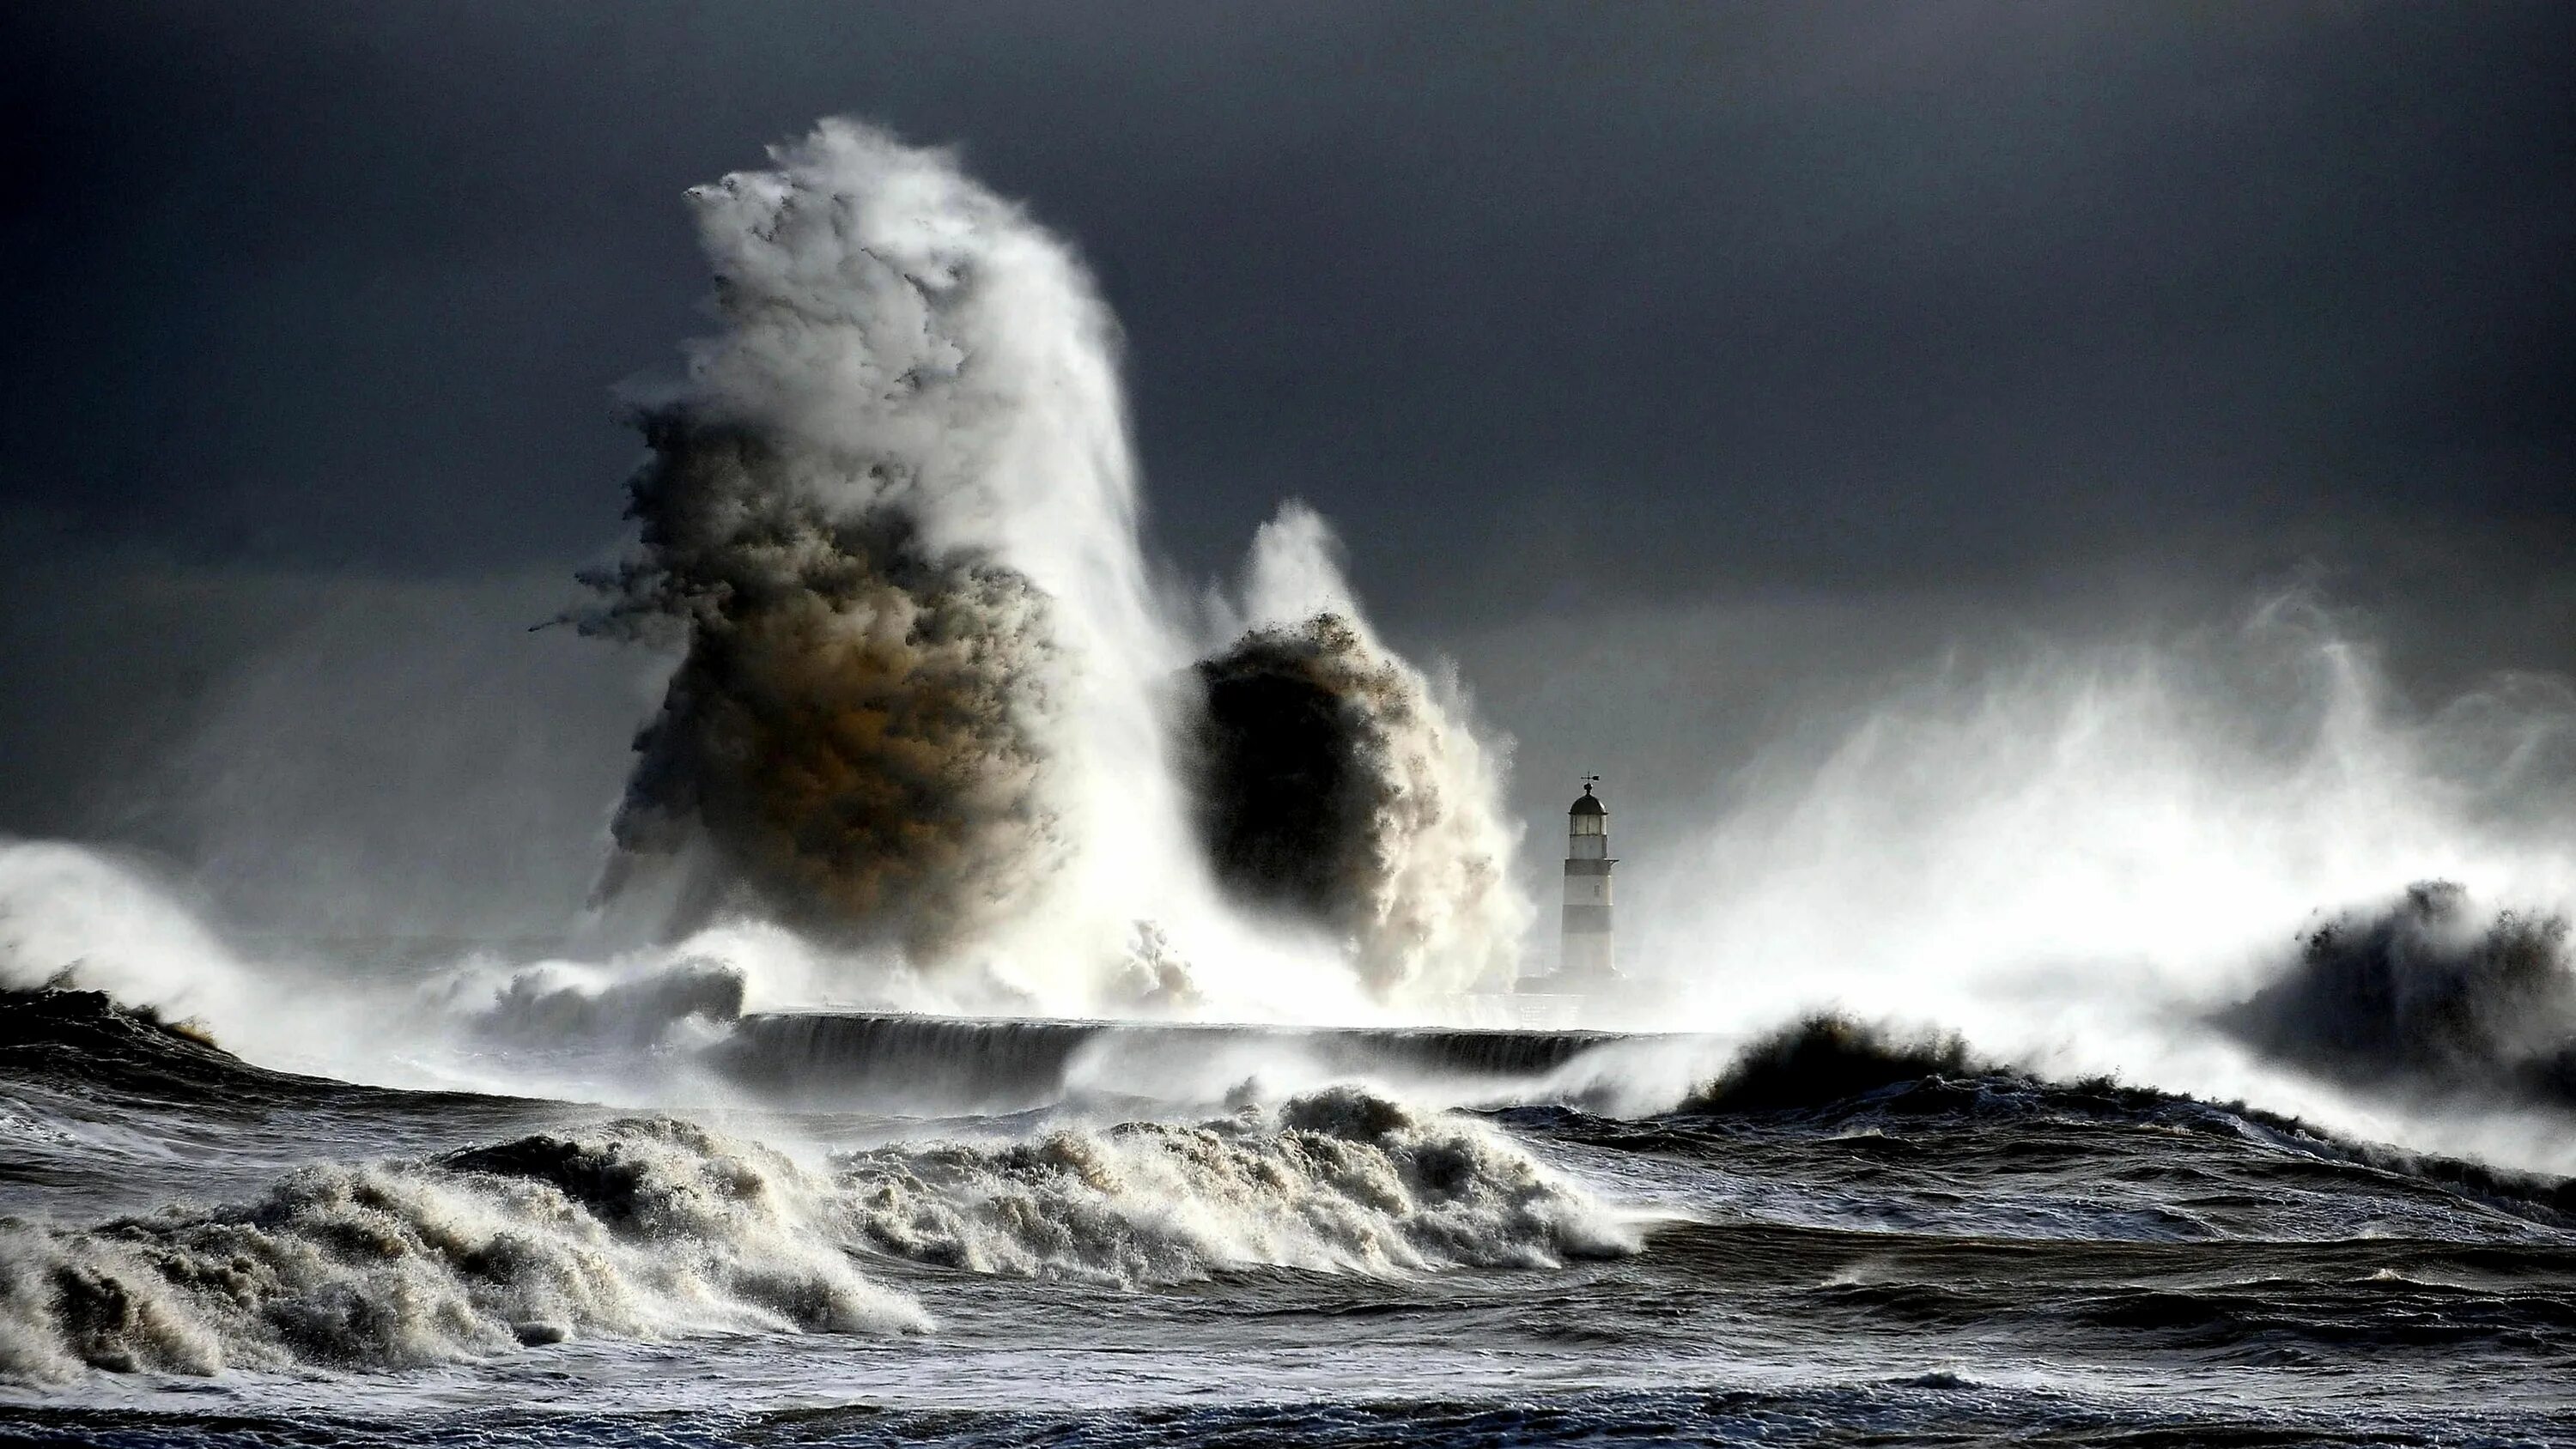 Карское море шторм. Атлантический океан шторм. Море океан волны шторм ЦУНАМИ. Вулкан Креницына волны шторм. Волна жизни 10